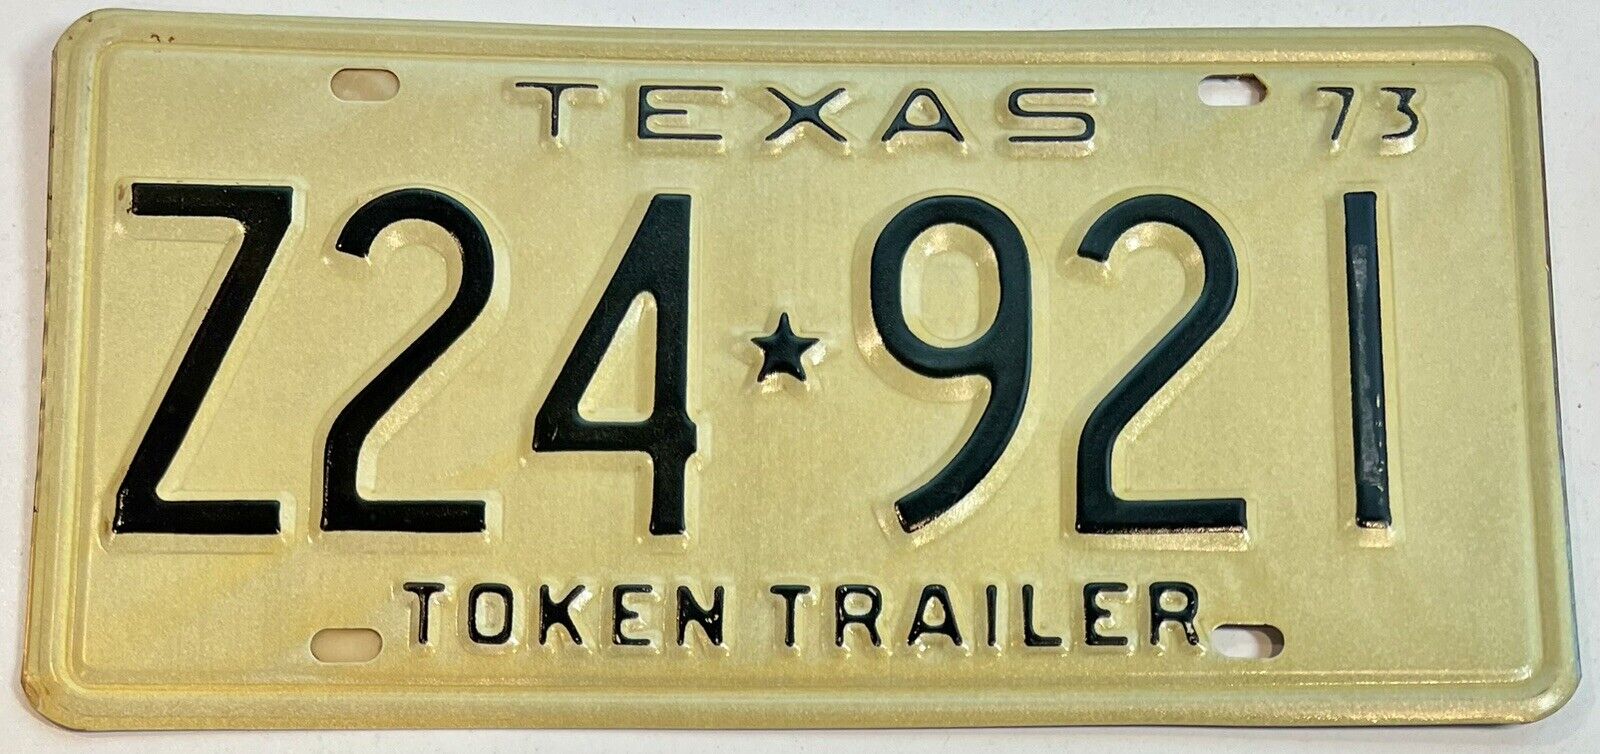 VTG Expired 1973 Texas Token Trailer License Plate # Z24 921 All Original NOS